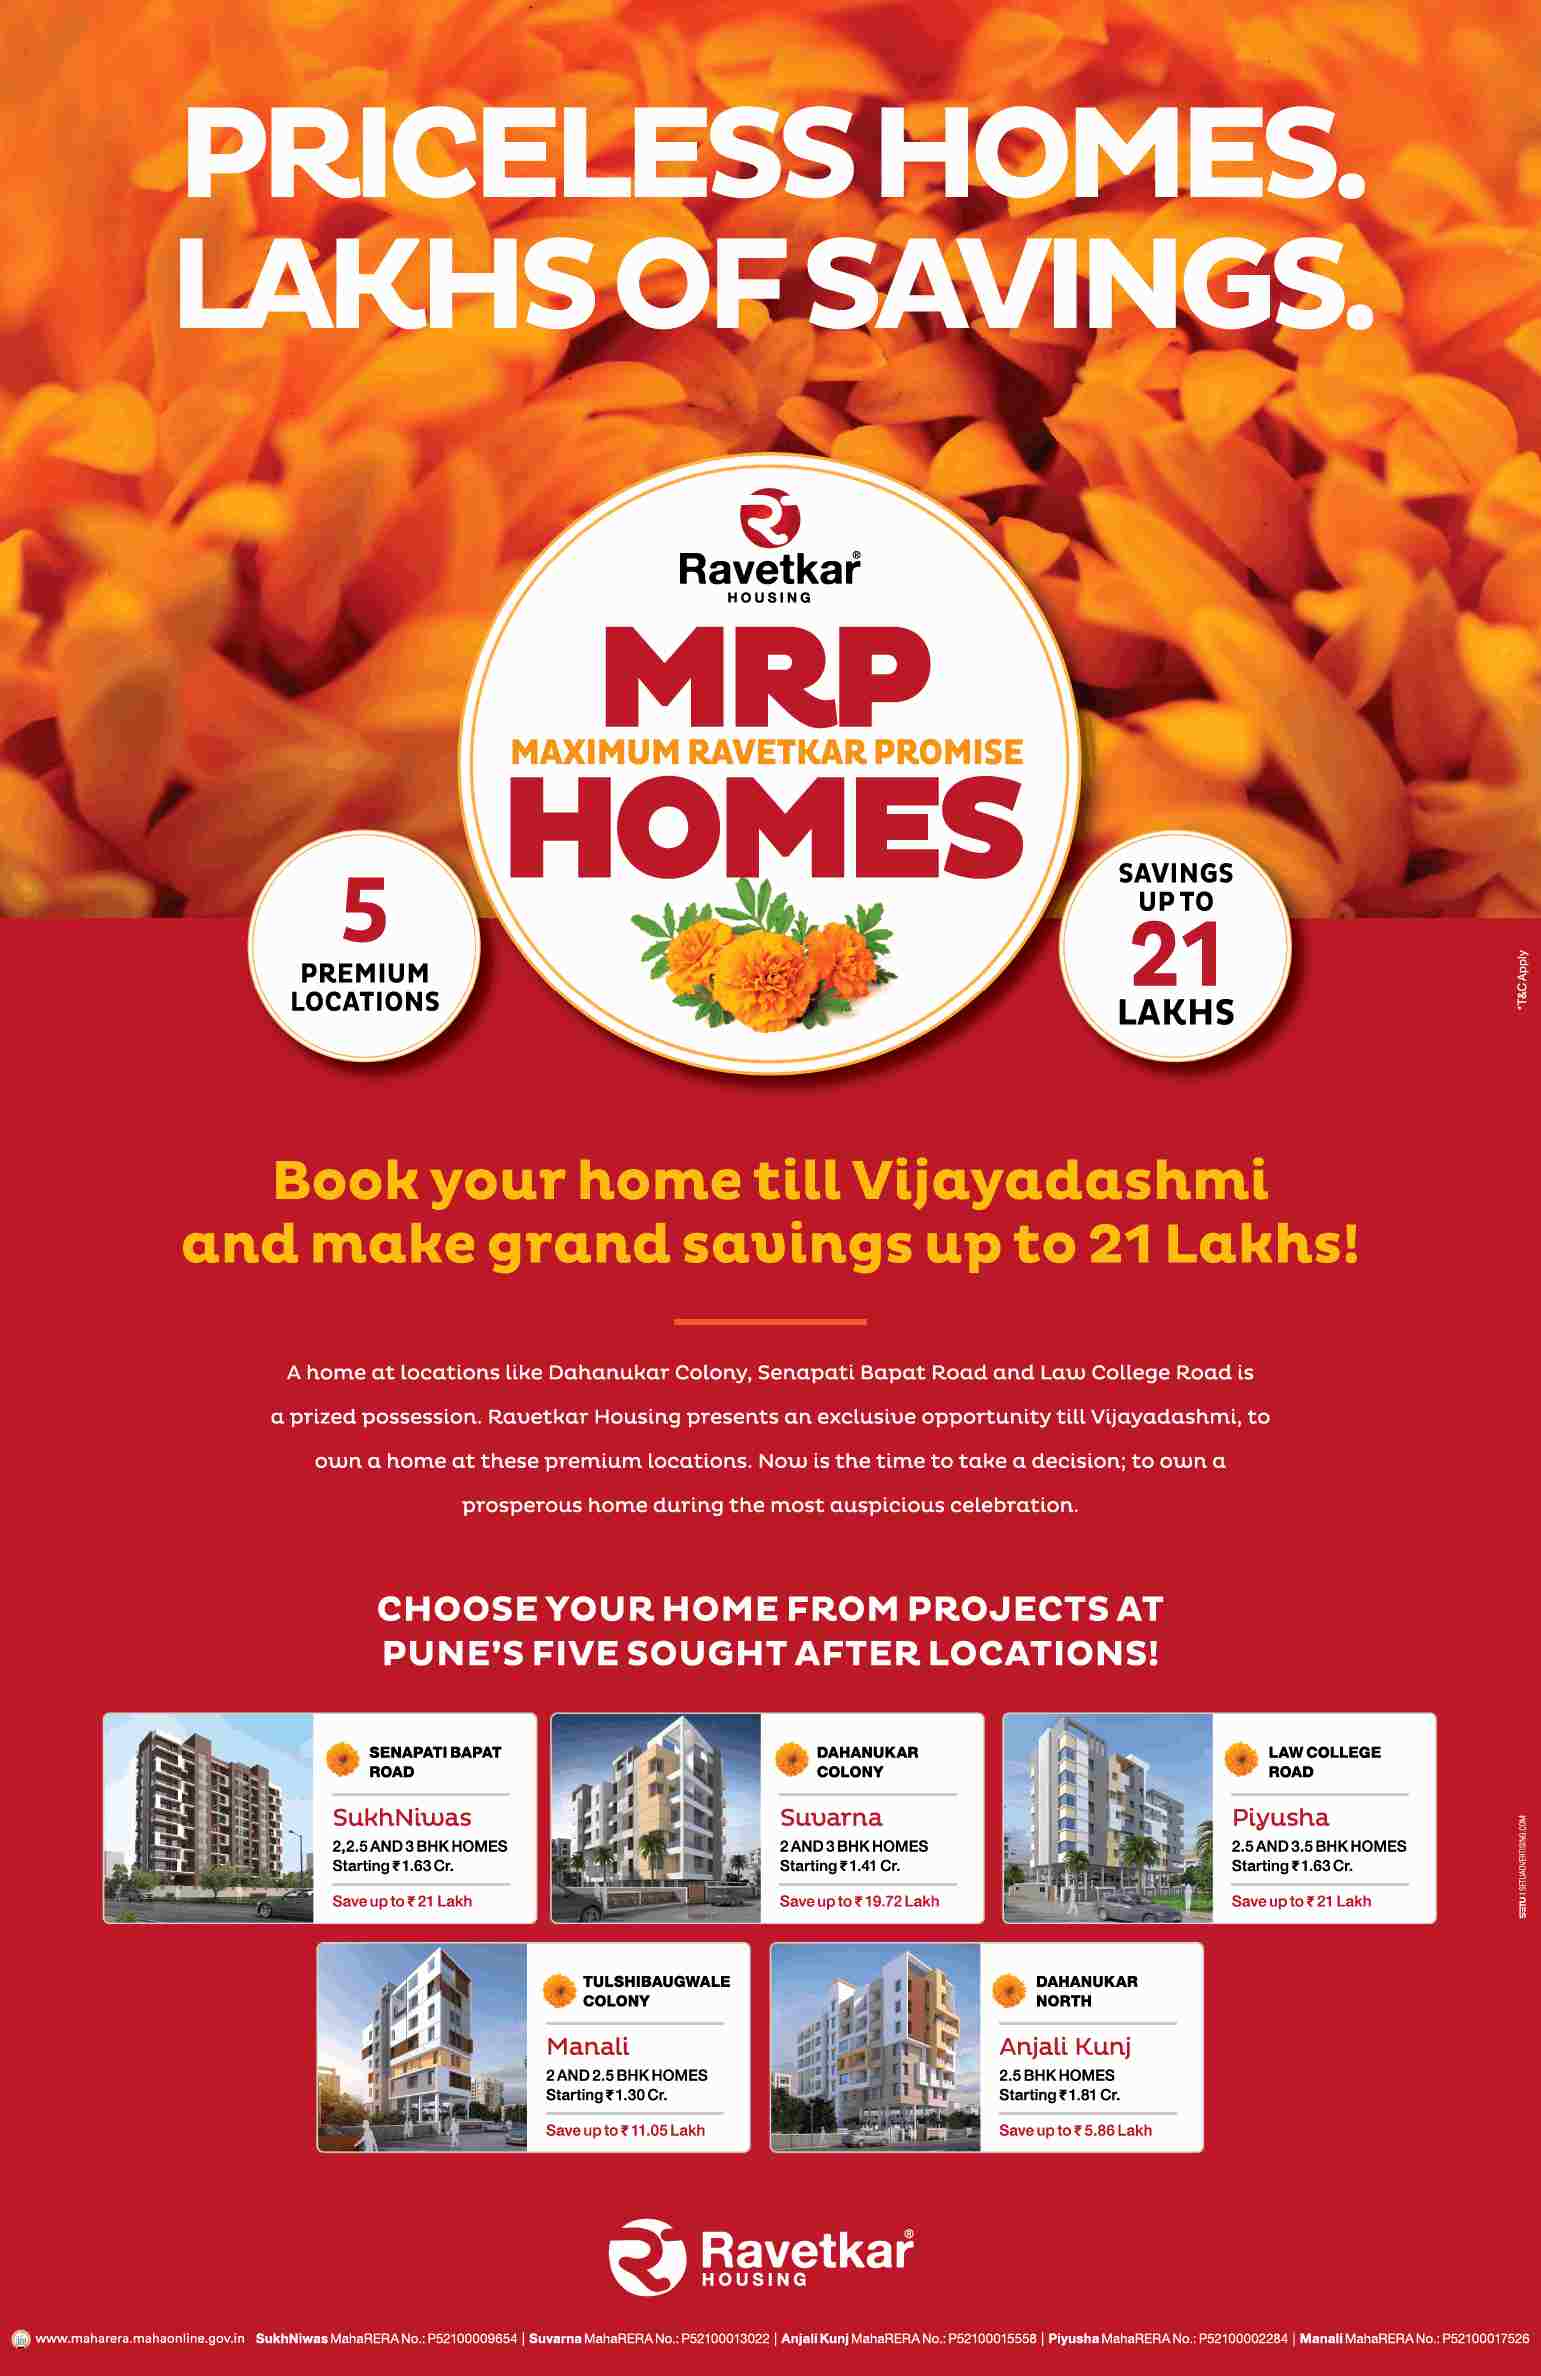 Make grand savings up to 21 Lakhs by booking your home till Vijayadashmi  at Ravetkar Properties in Pune